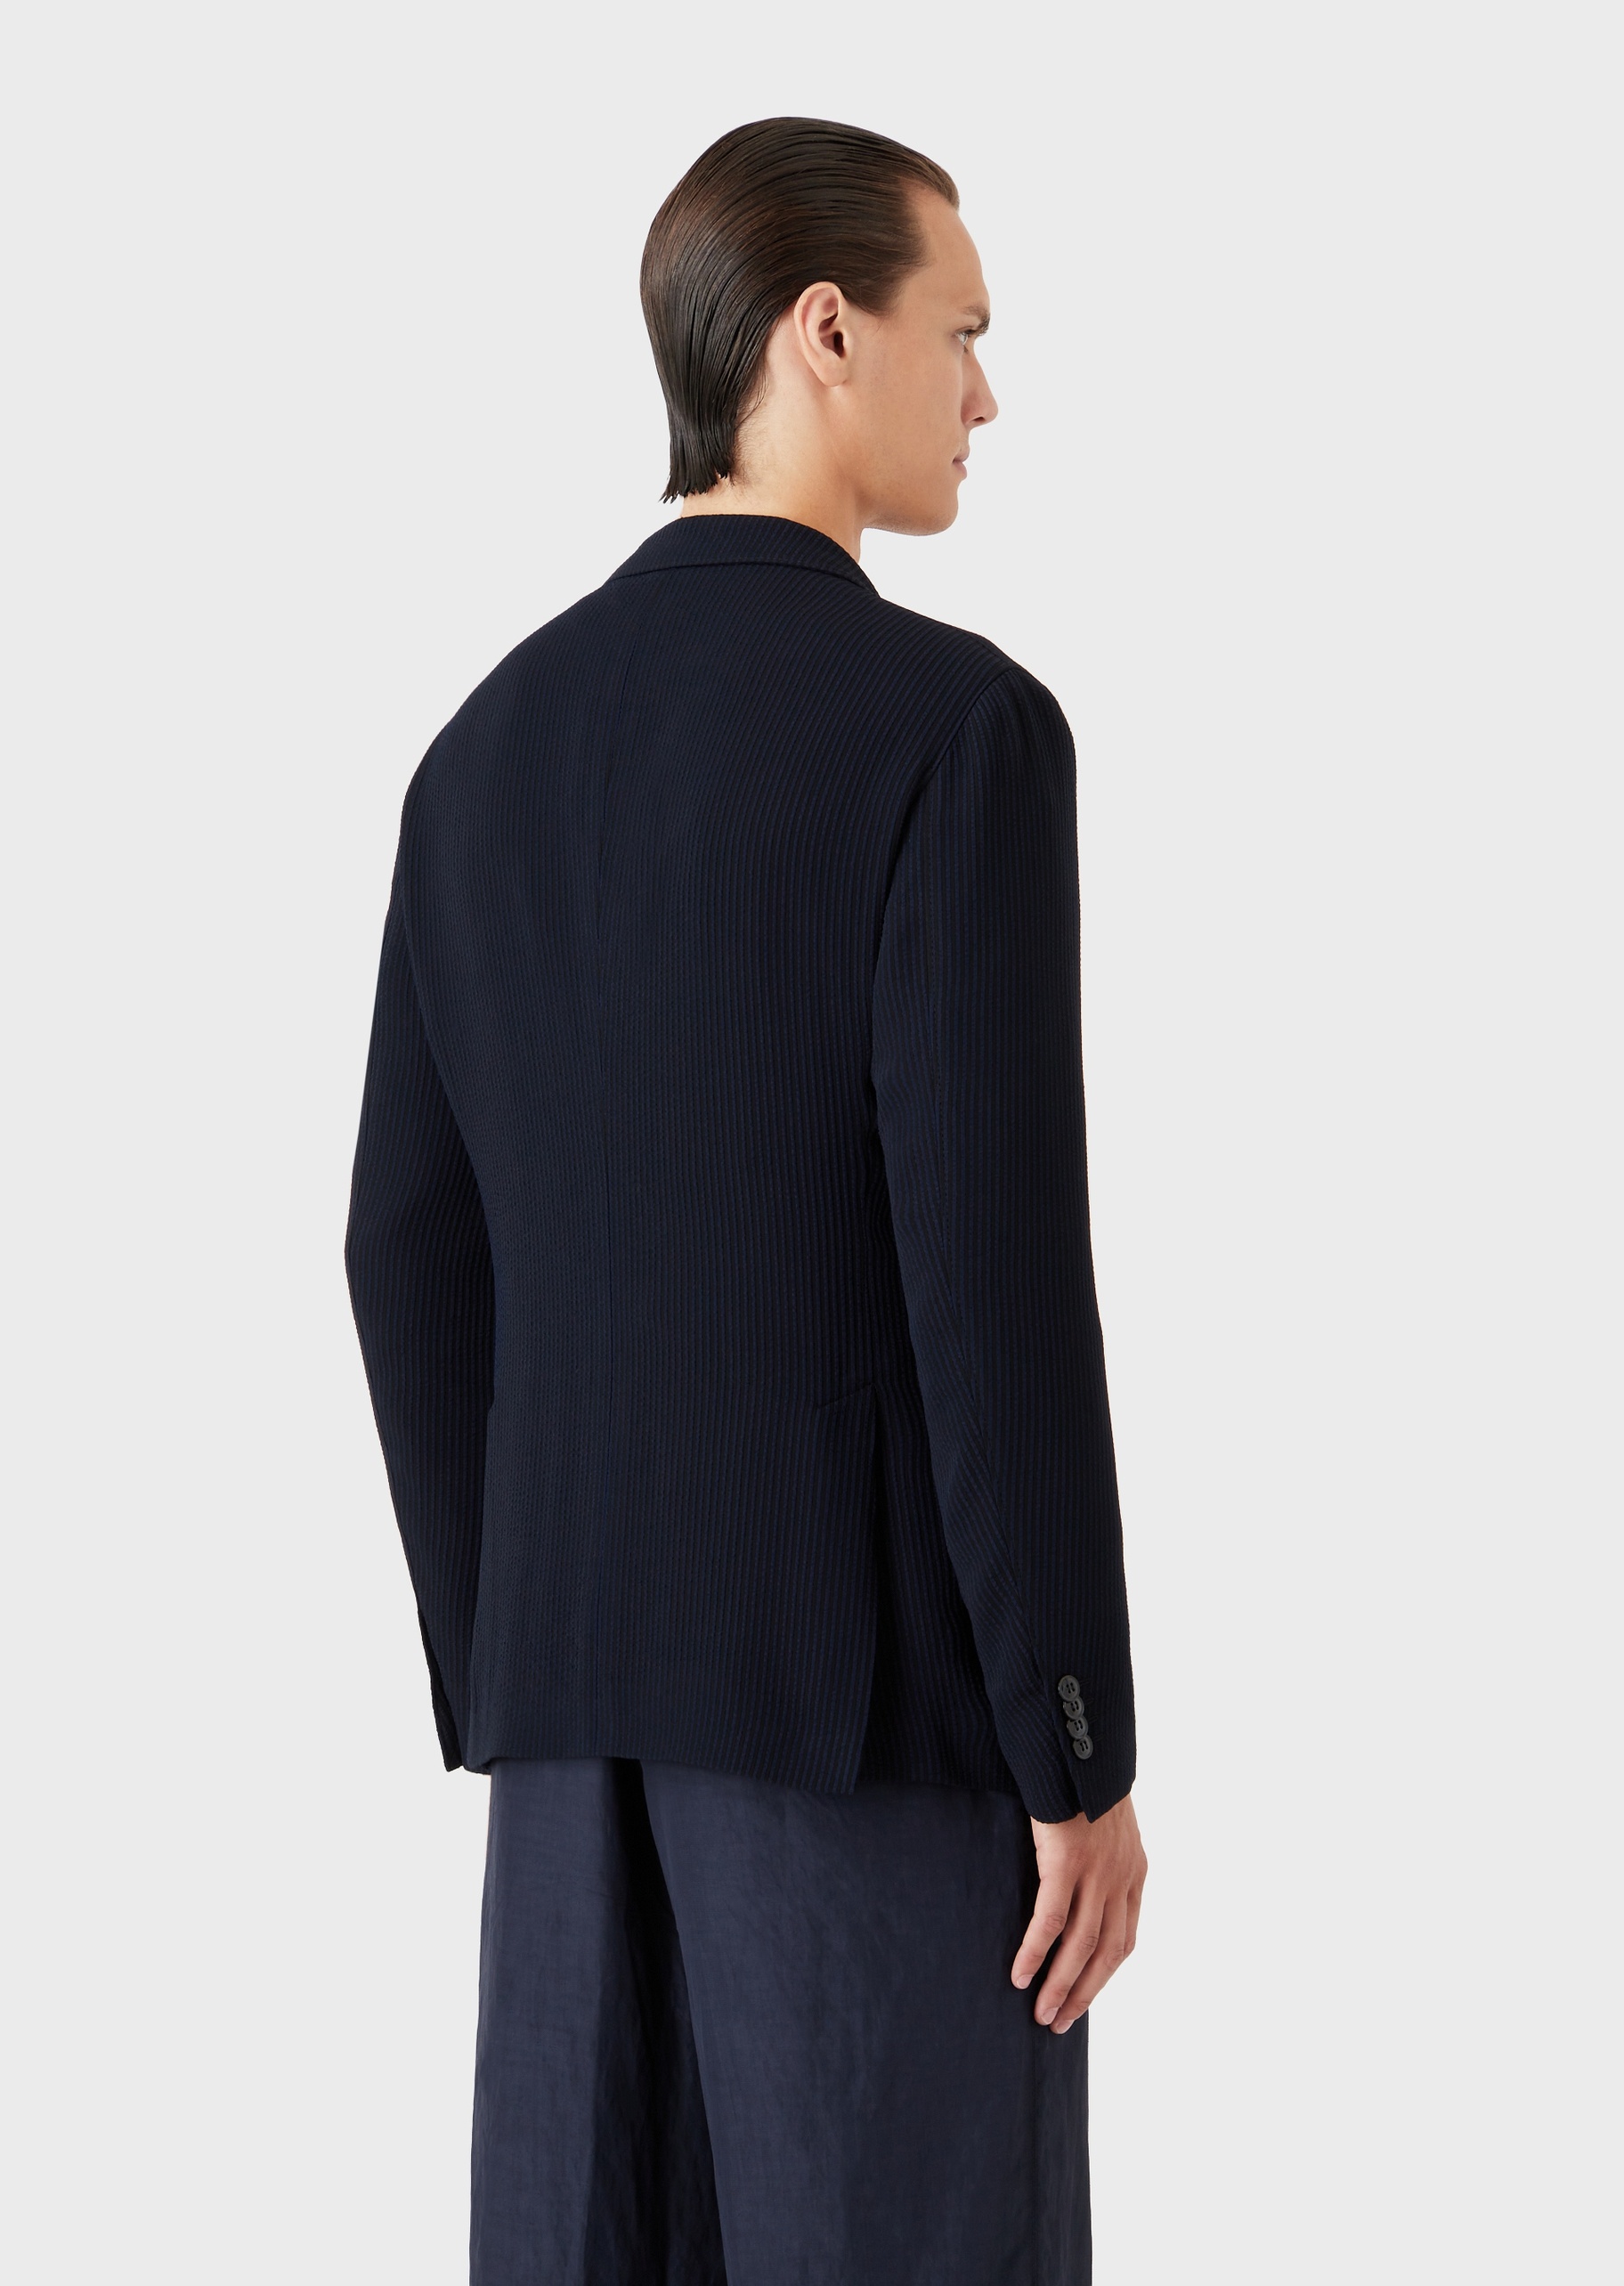 Giorgio Armani 男士纯色复古戗驳领双排扣泡泡纱西装外套